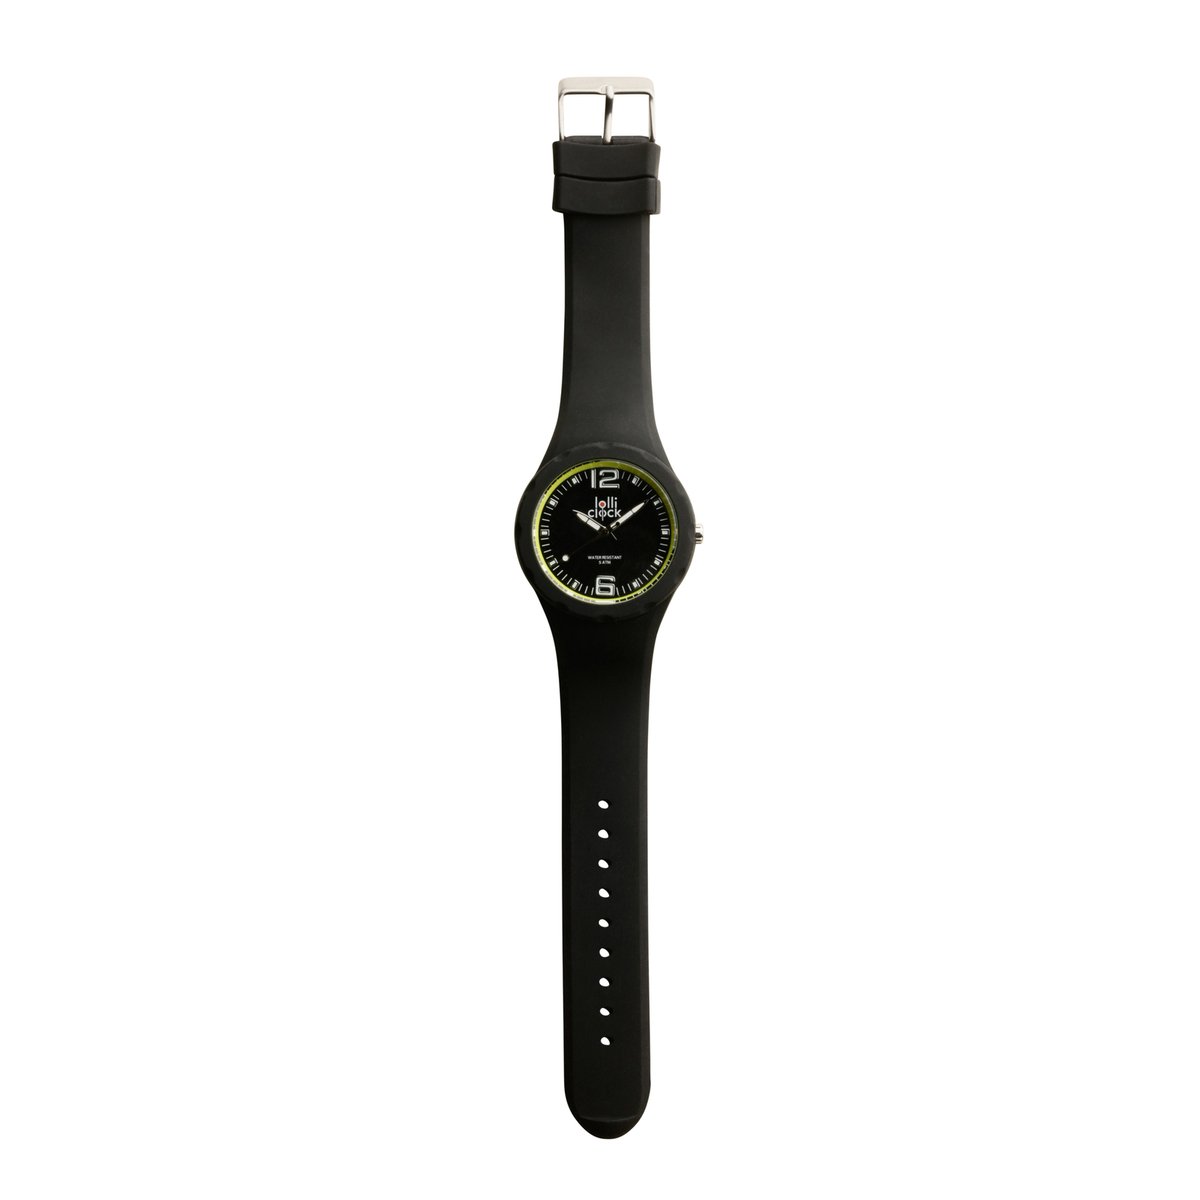 Armbanduhr LOLLICLOCK-FRESH schwarz/gelb